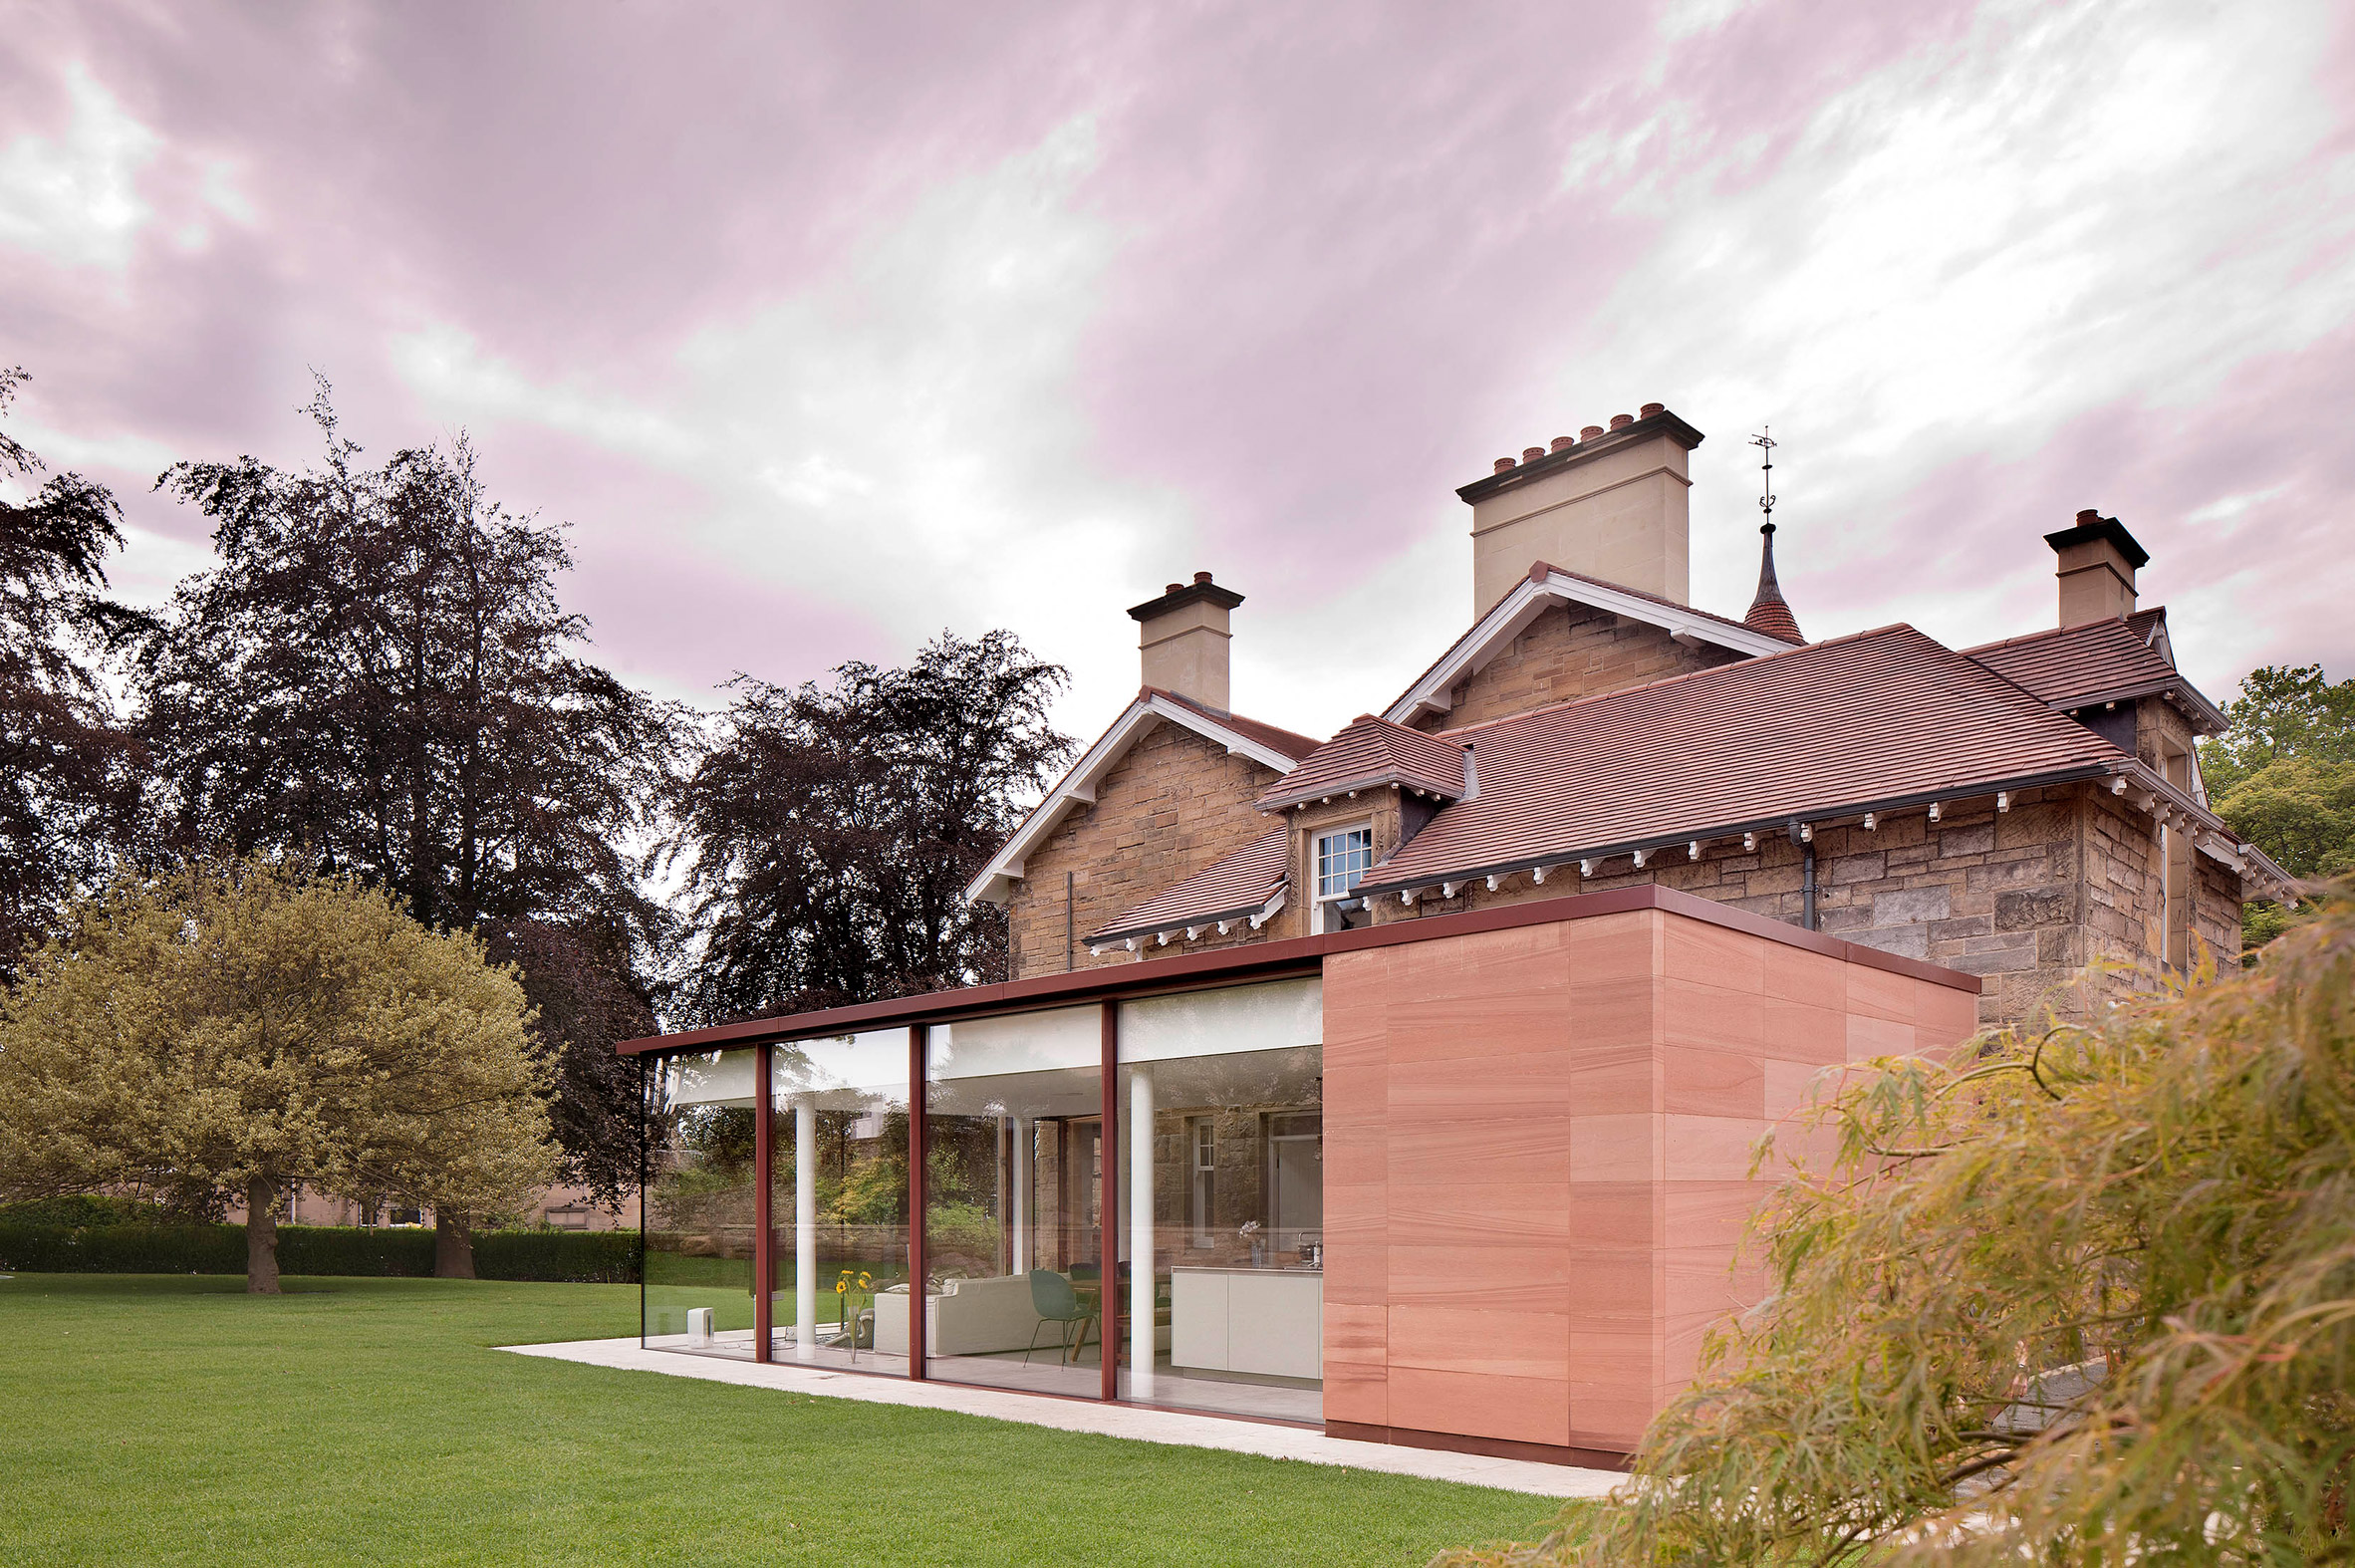 Edinburgh Pavilion by Archer + Braun